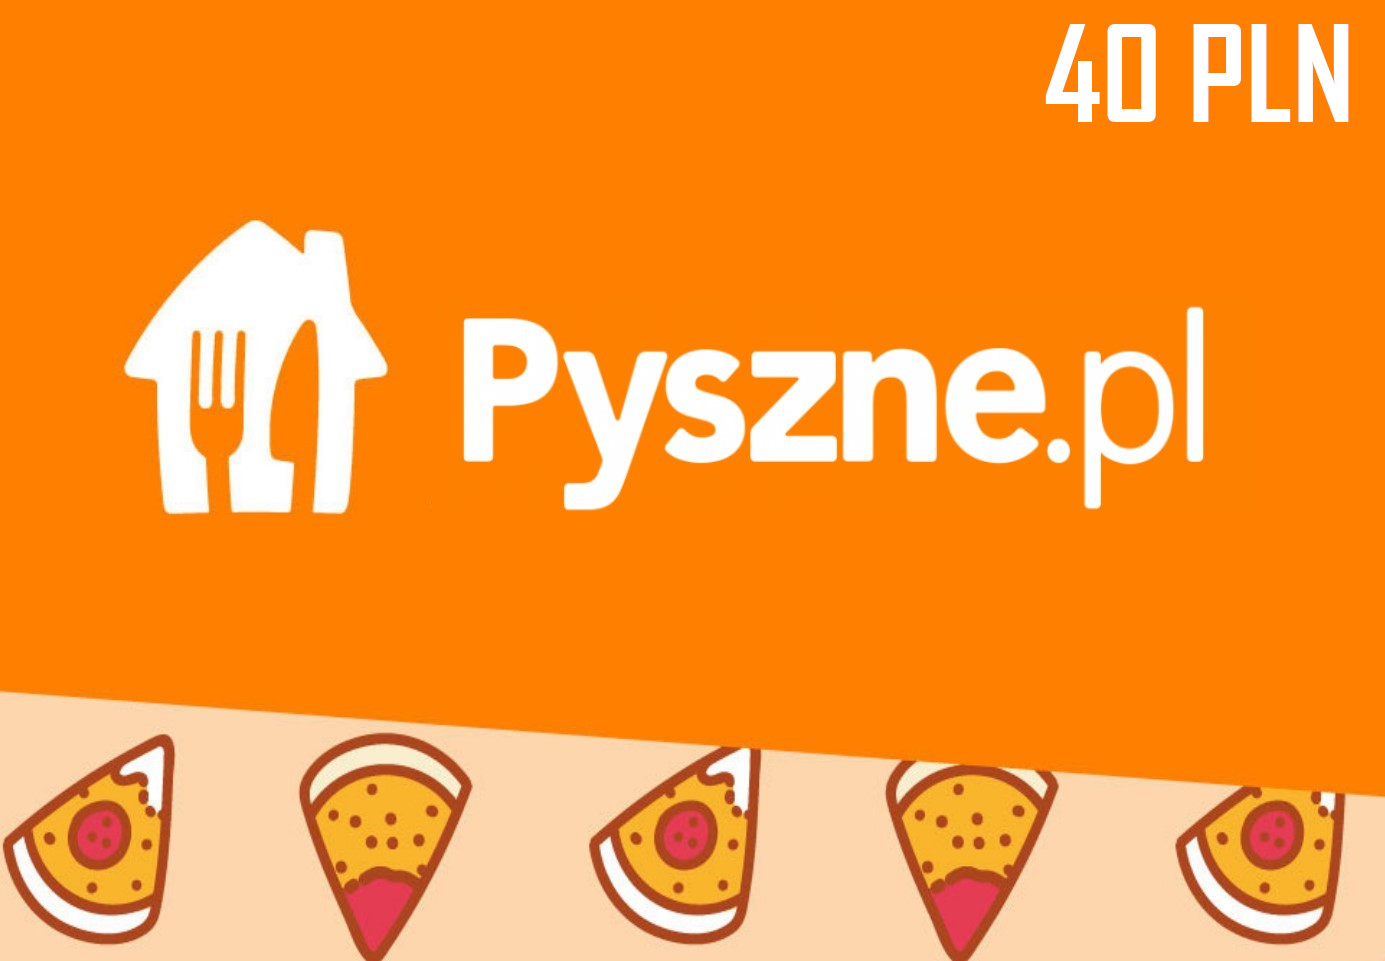 Pyszne.pl 40 PLN Gift Card PL (11.82$)